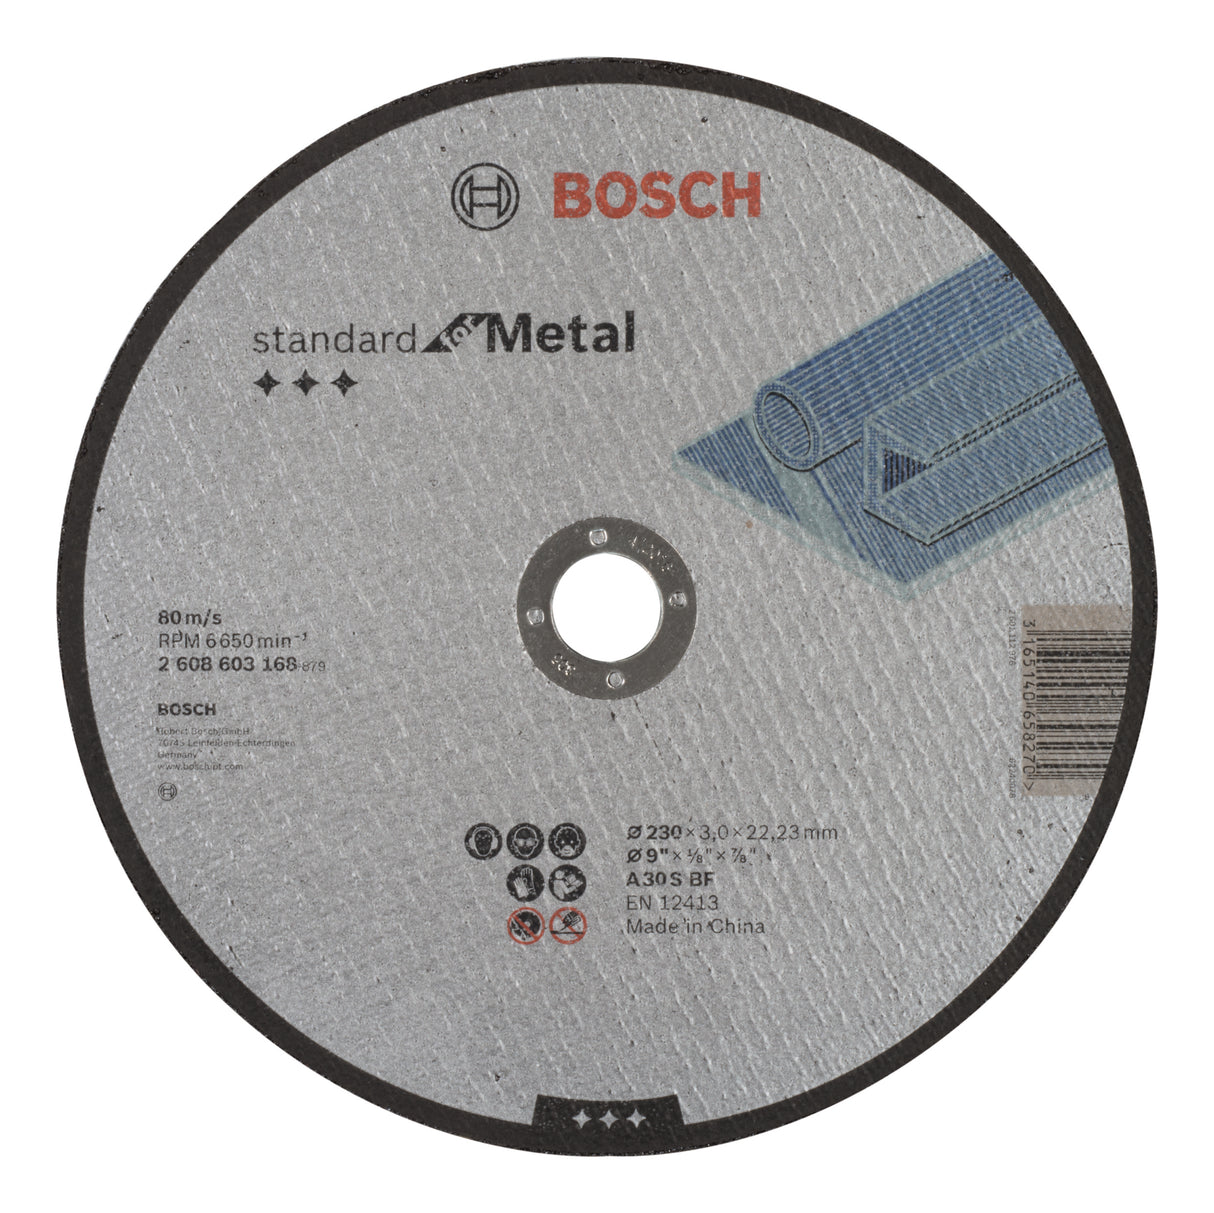 Bosch Professional Metal Cutting Disc - Straight, Standard A 30 S BF, 230mm x 22.23mm x 3.0mm